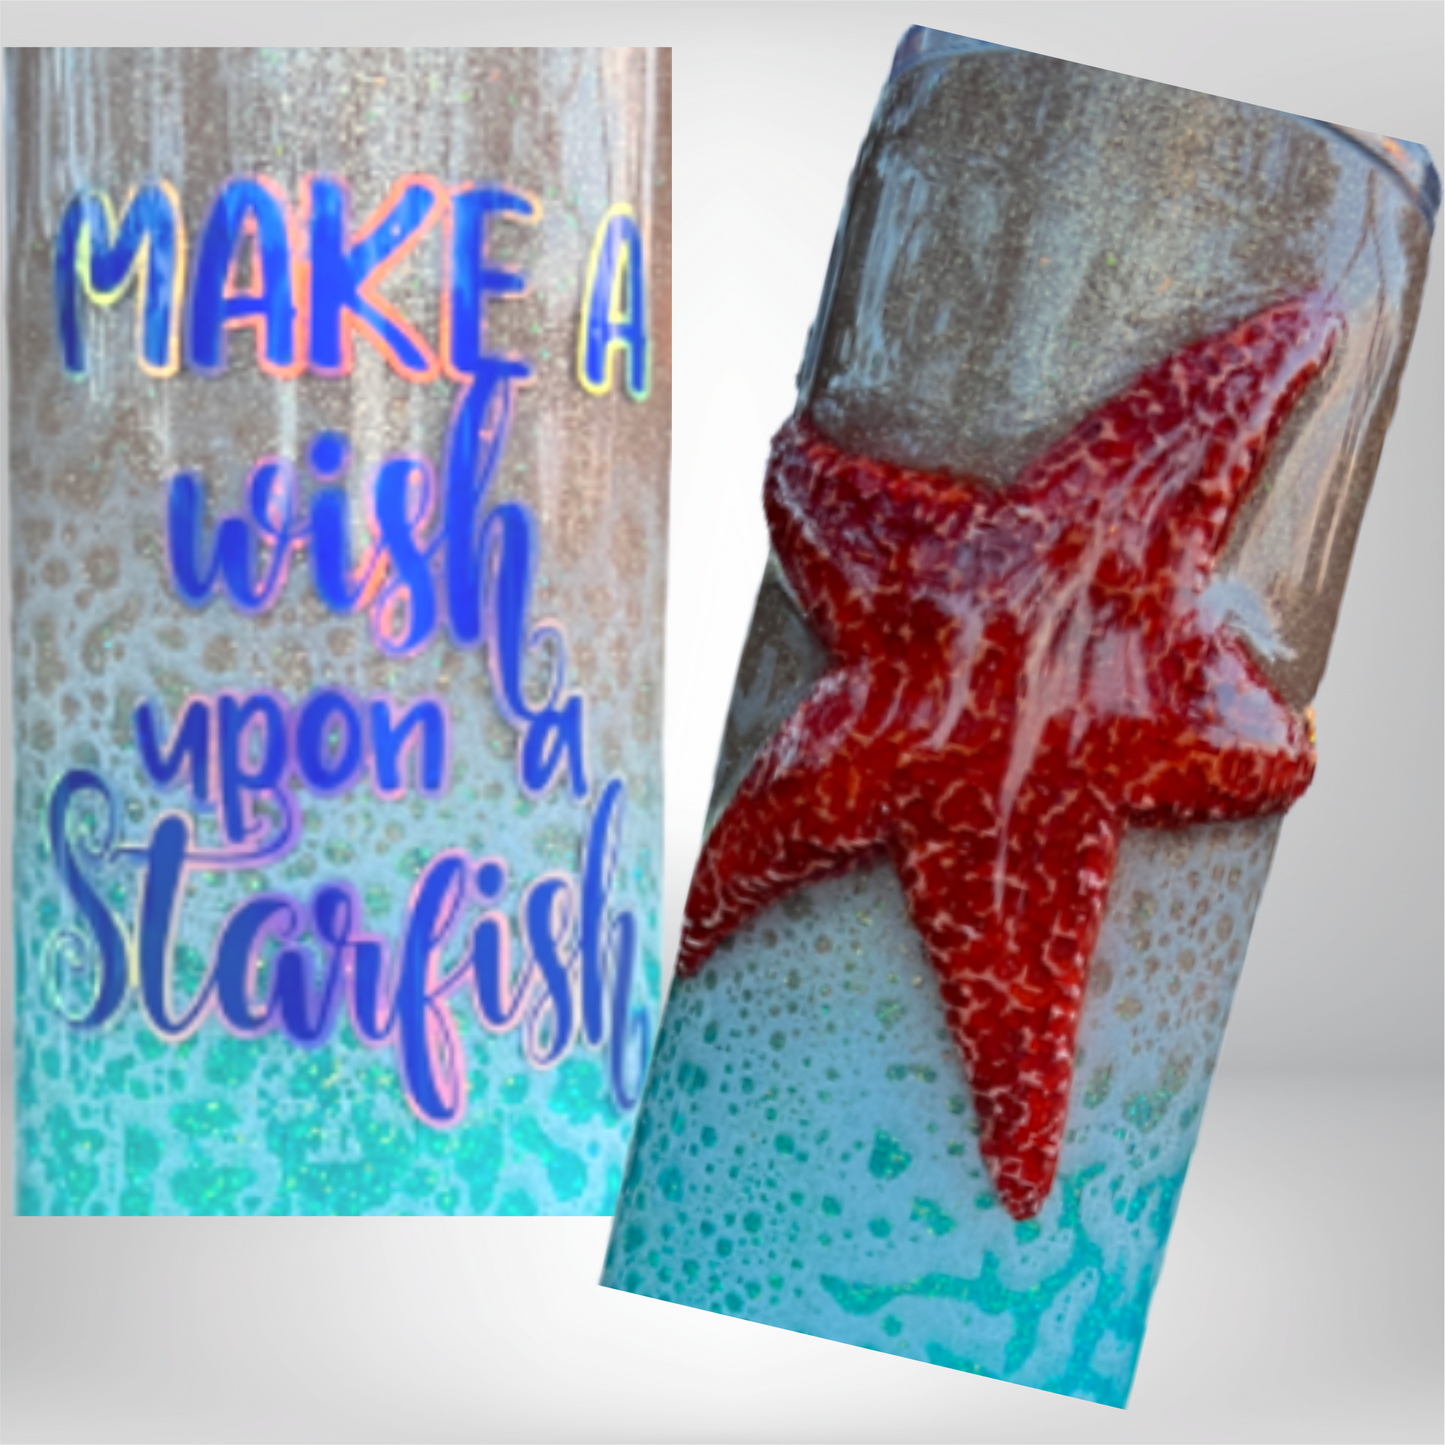 3D Make A Wish Upon a Starfish Tumbler  - by Cristina